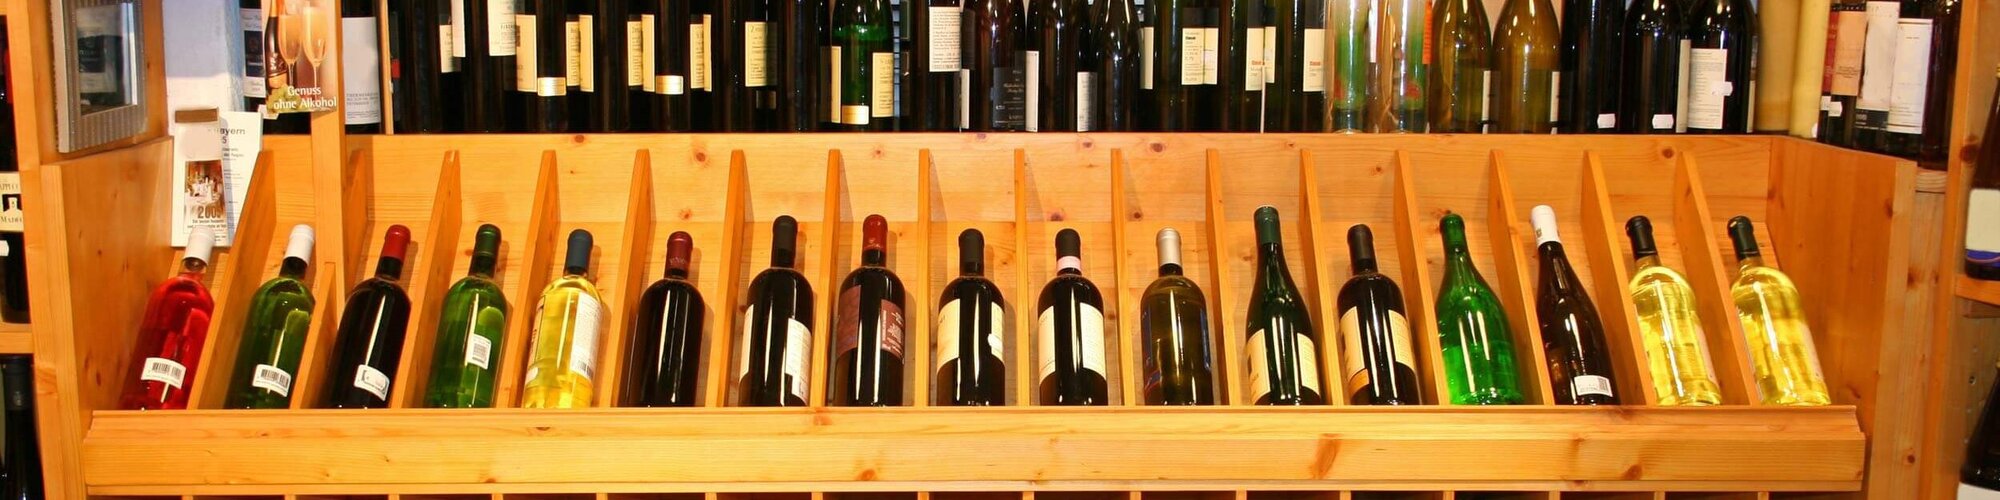 Auswahl verschiedener Weinsorten